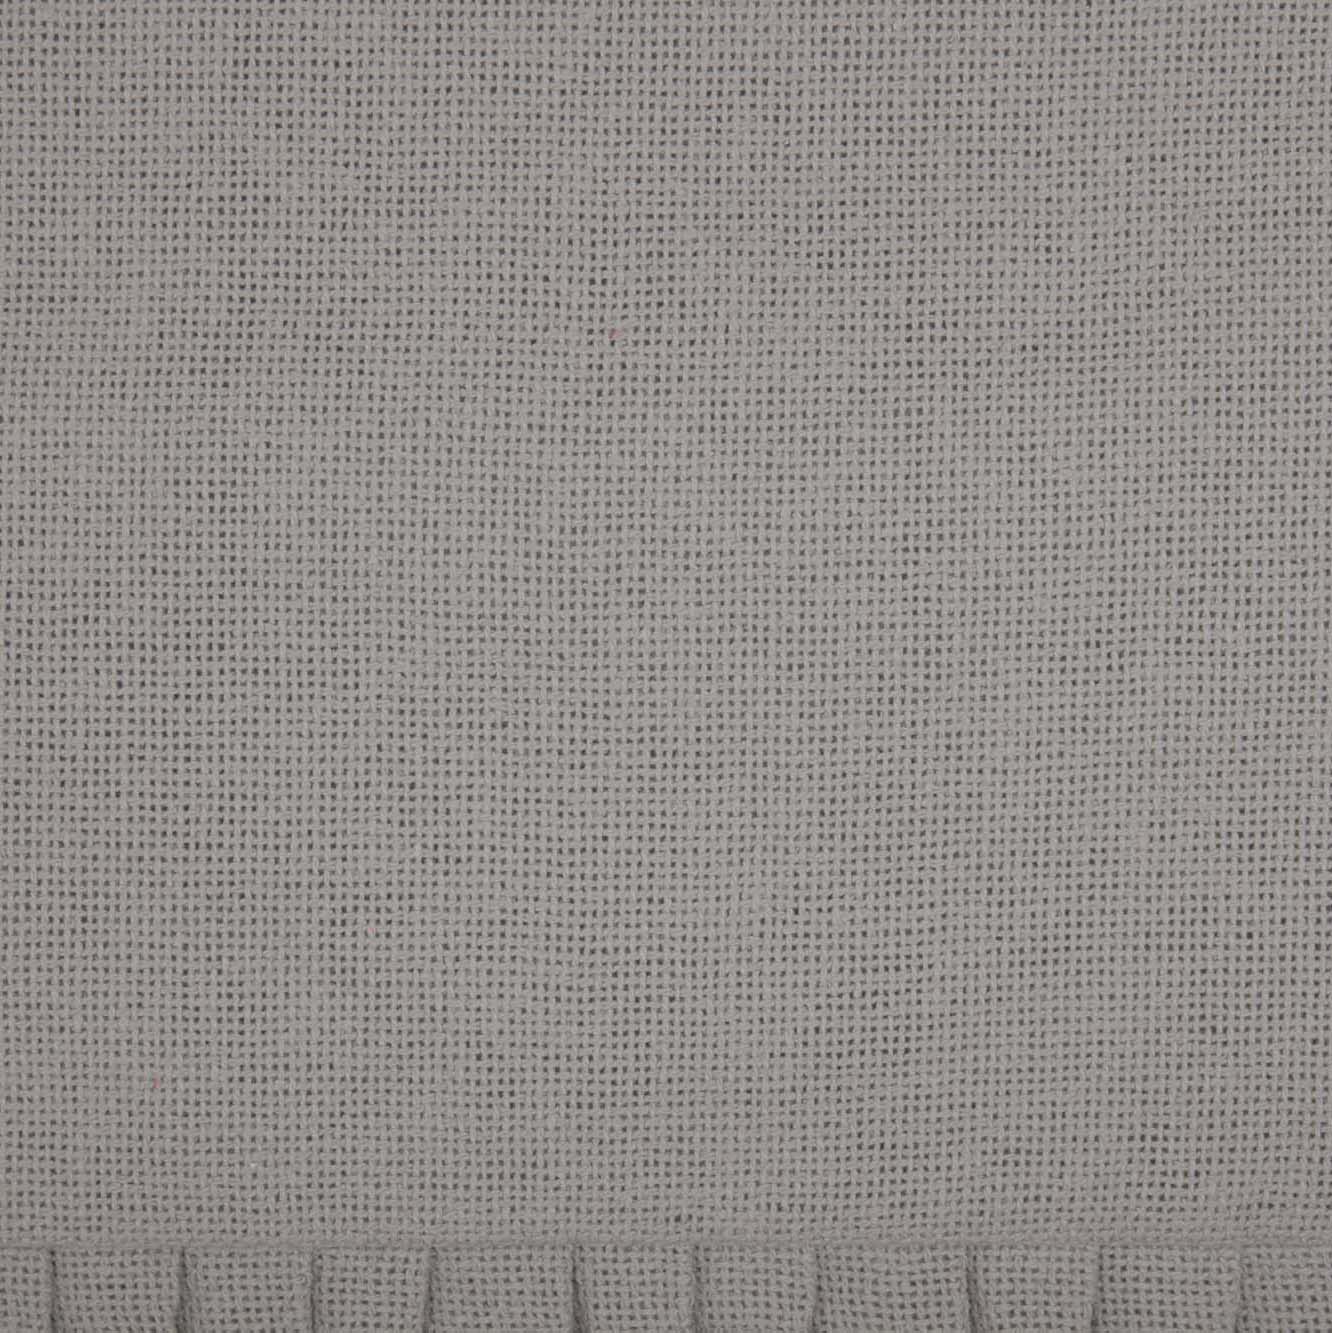 Burlap Dove Grey Fabric Euro Sham w/ Fringed Ruffle 26x26 VHC Brands